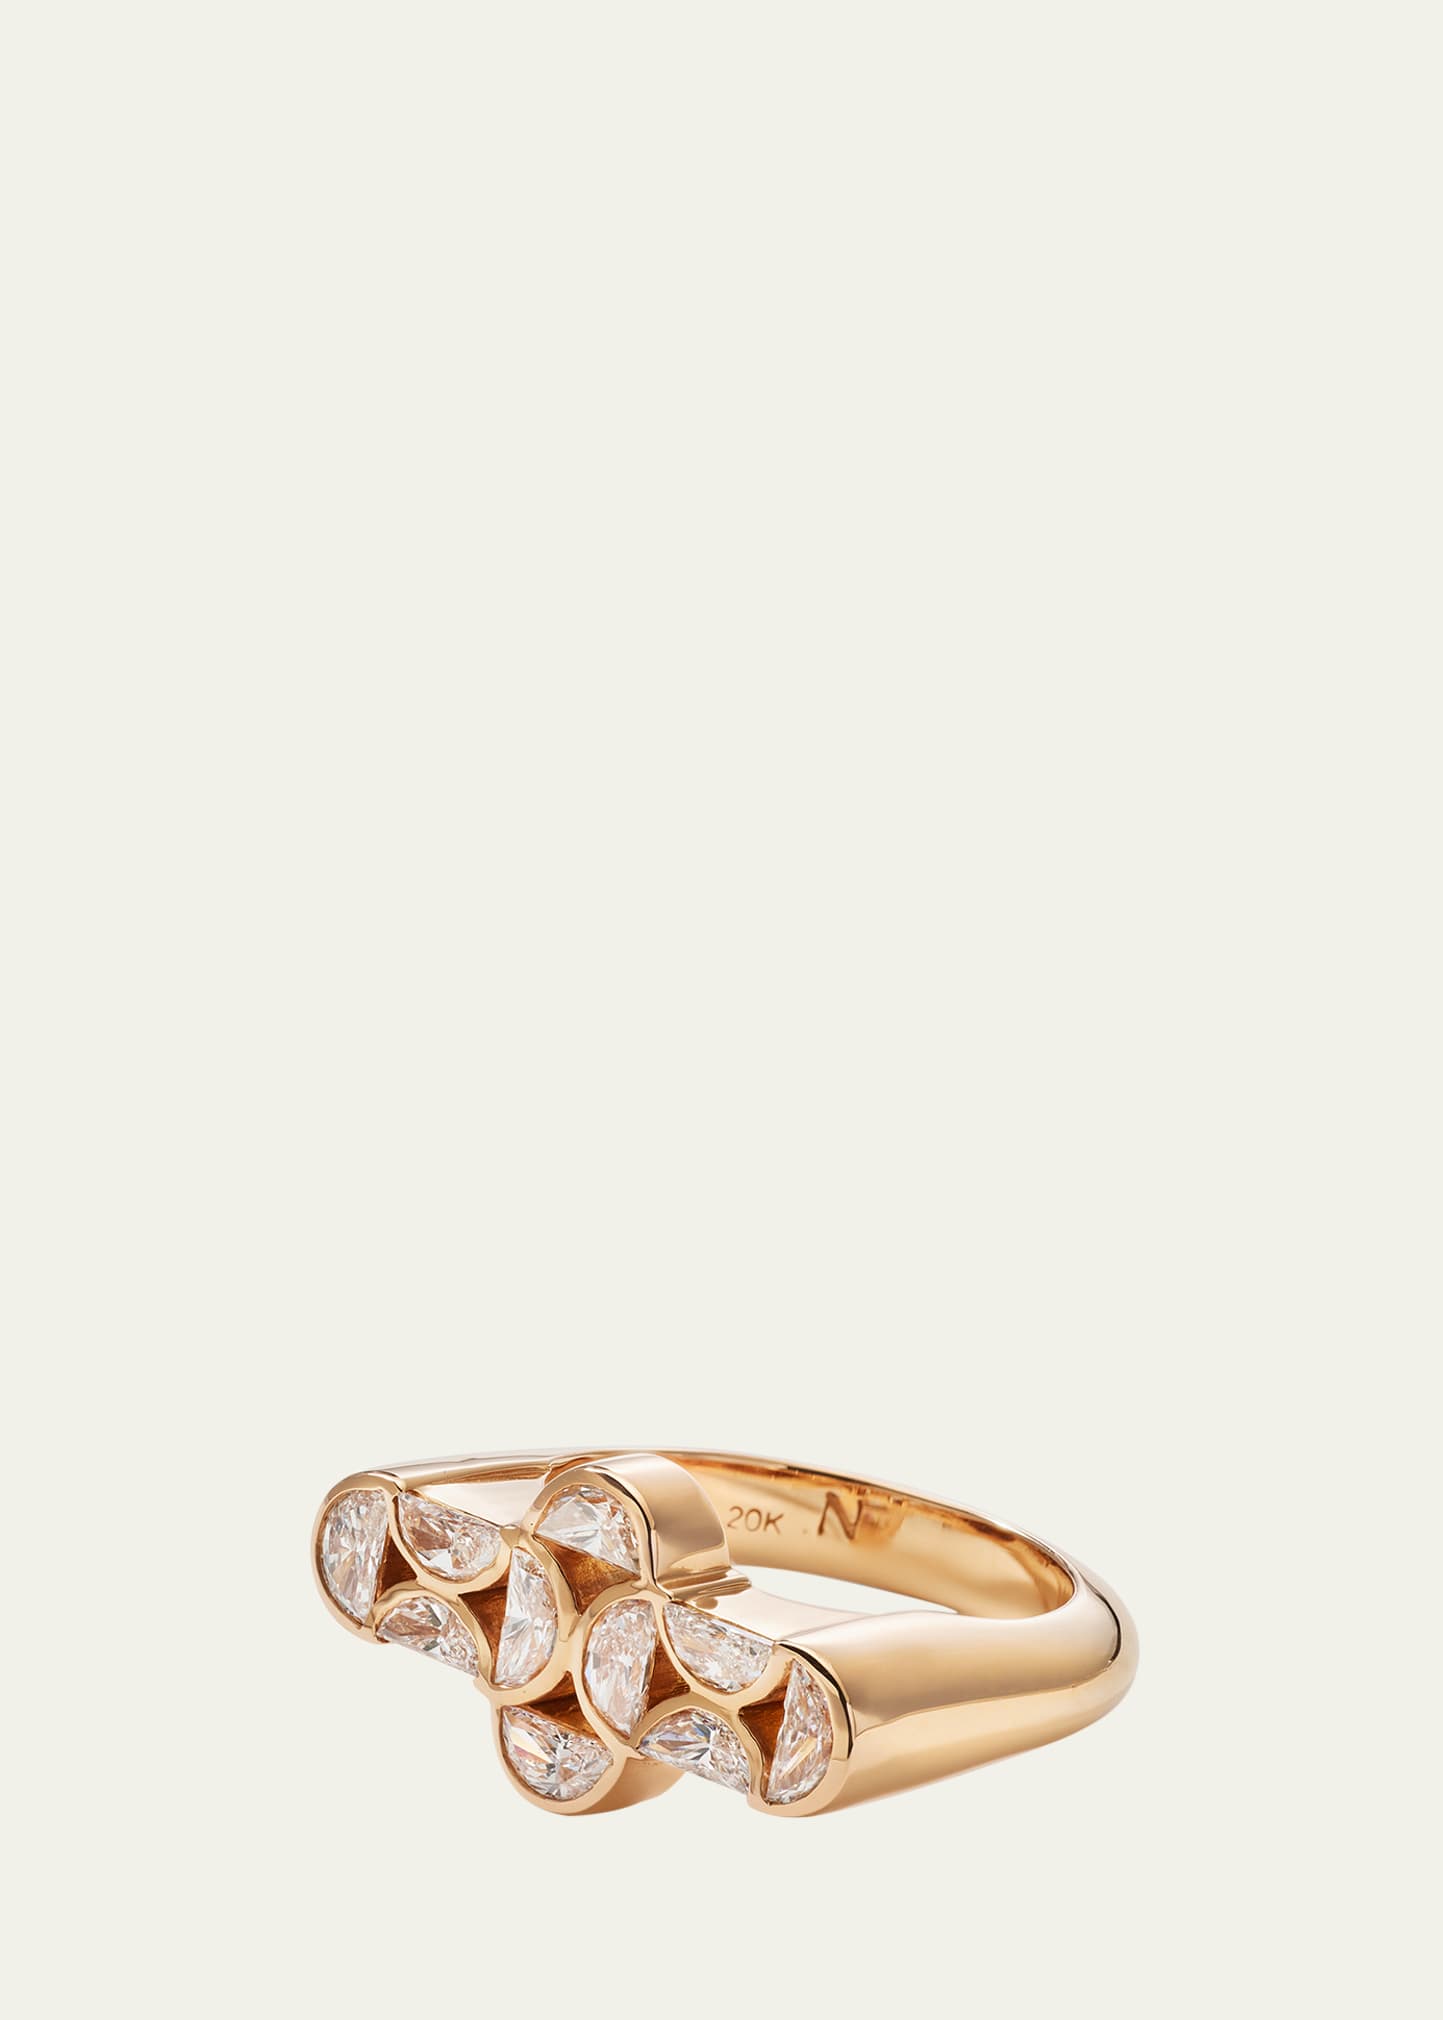 20K Rose Gold Byzantine Bullet Ring with White Diamond Half Moons